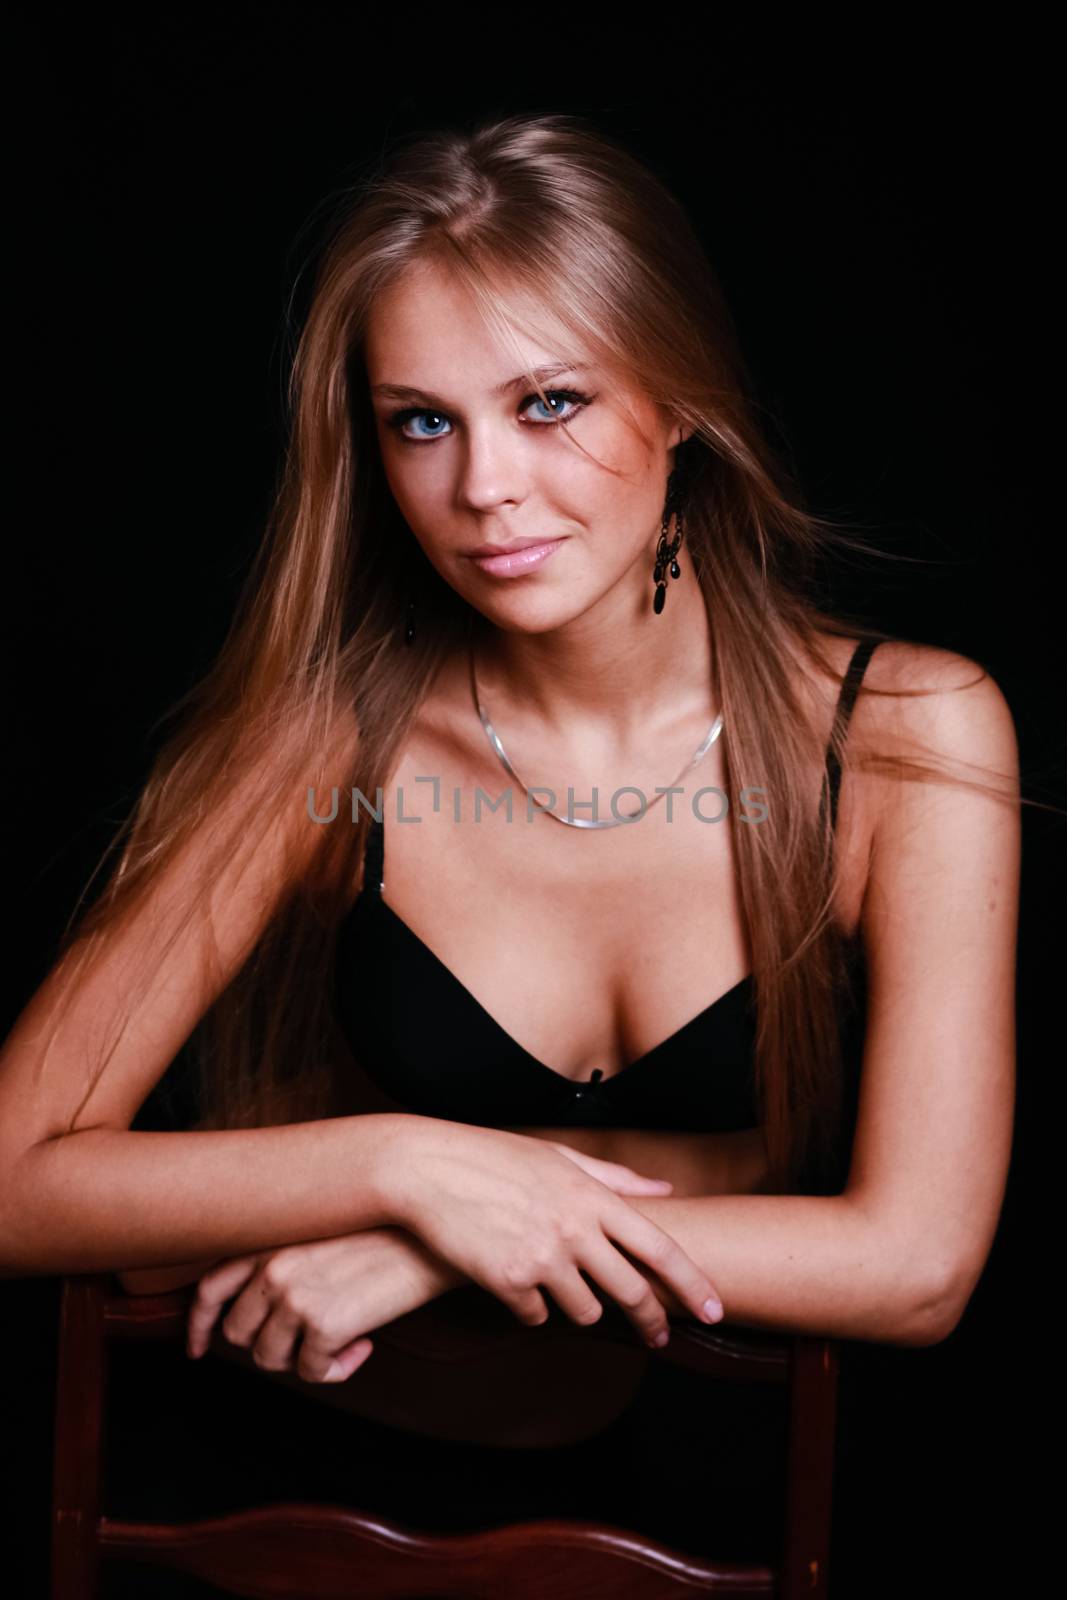 Sexy blond in black lingerie over dark background